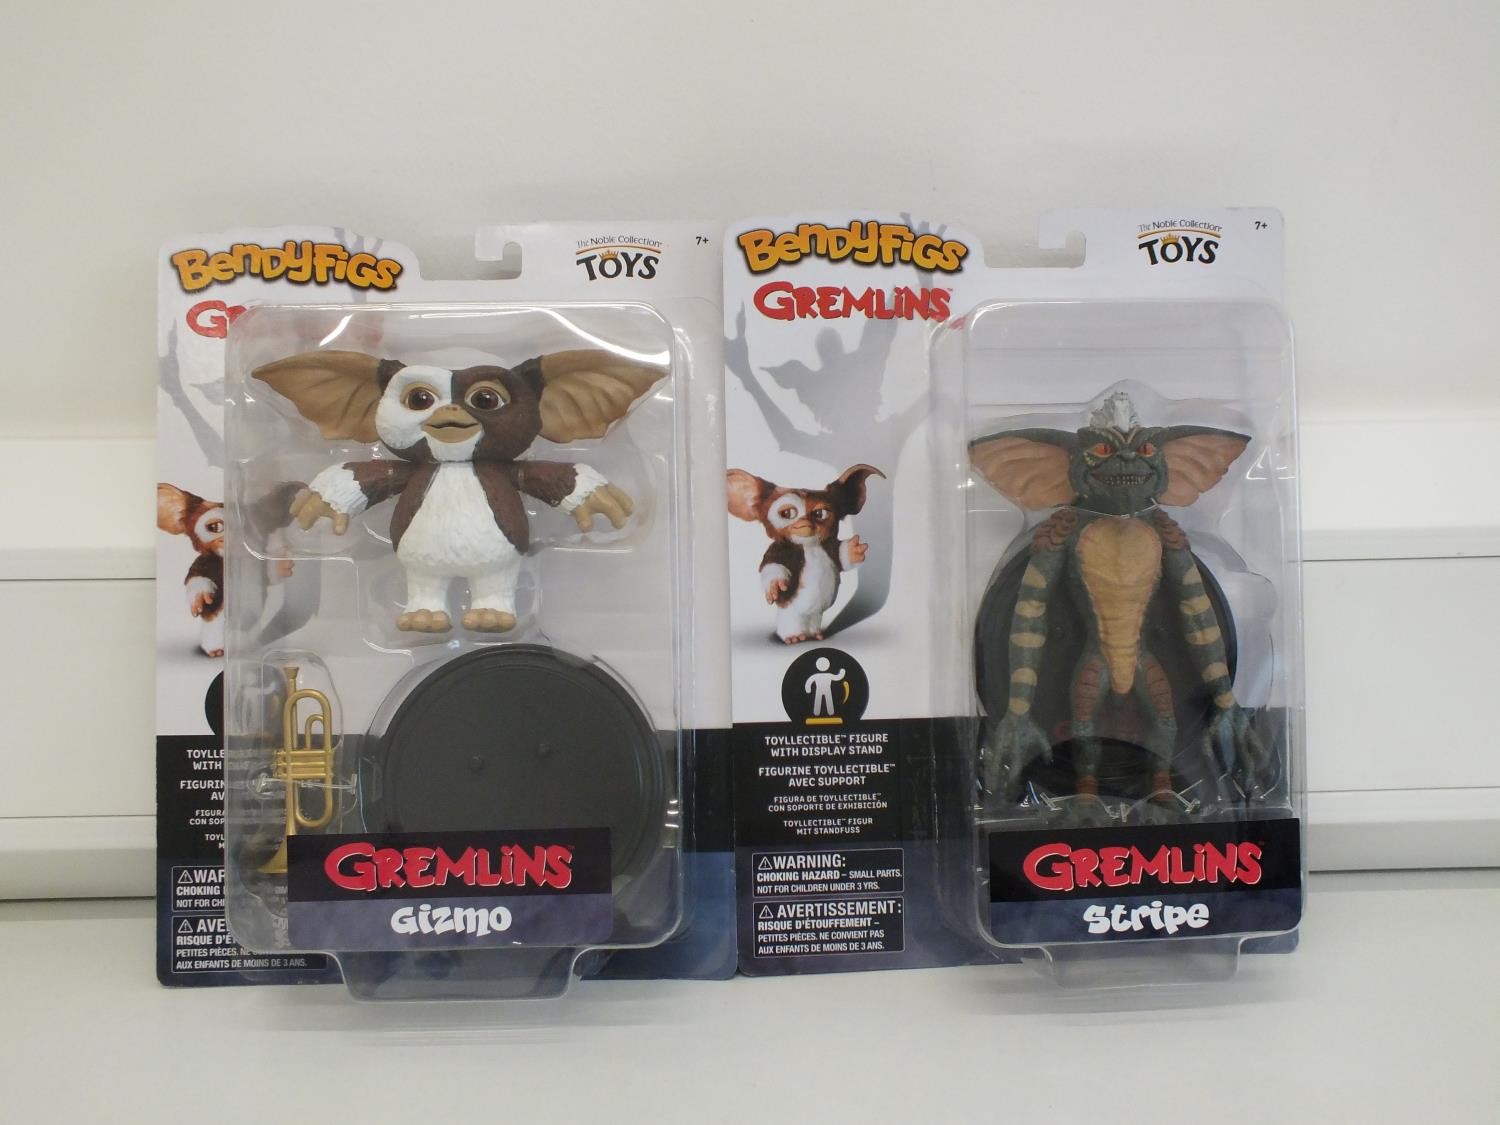 Mini figurine Gizmo Gremlins Bendyfigs - Mini figurines